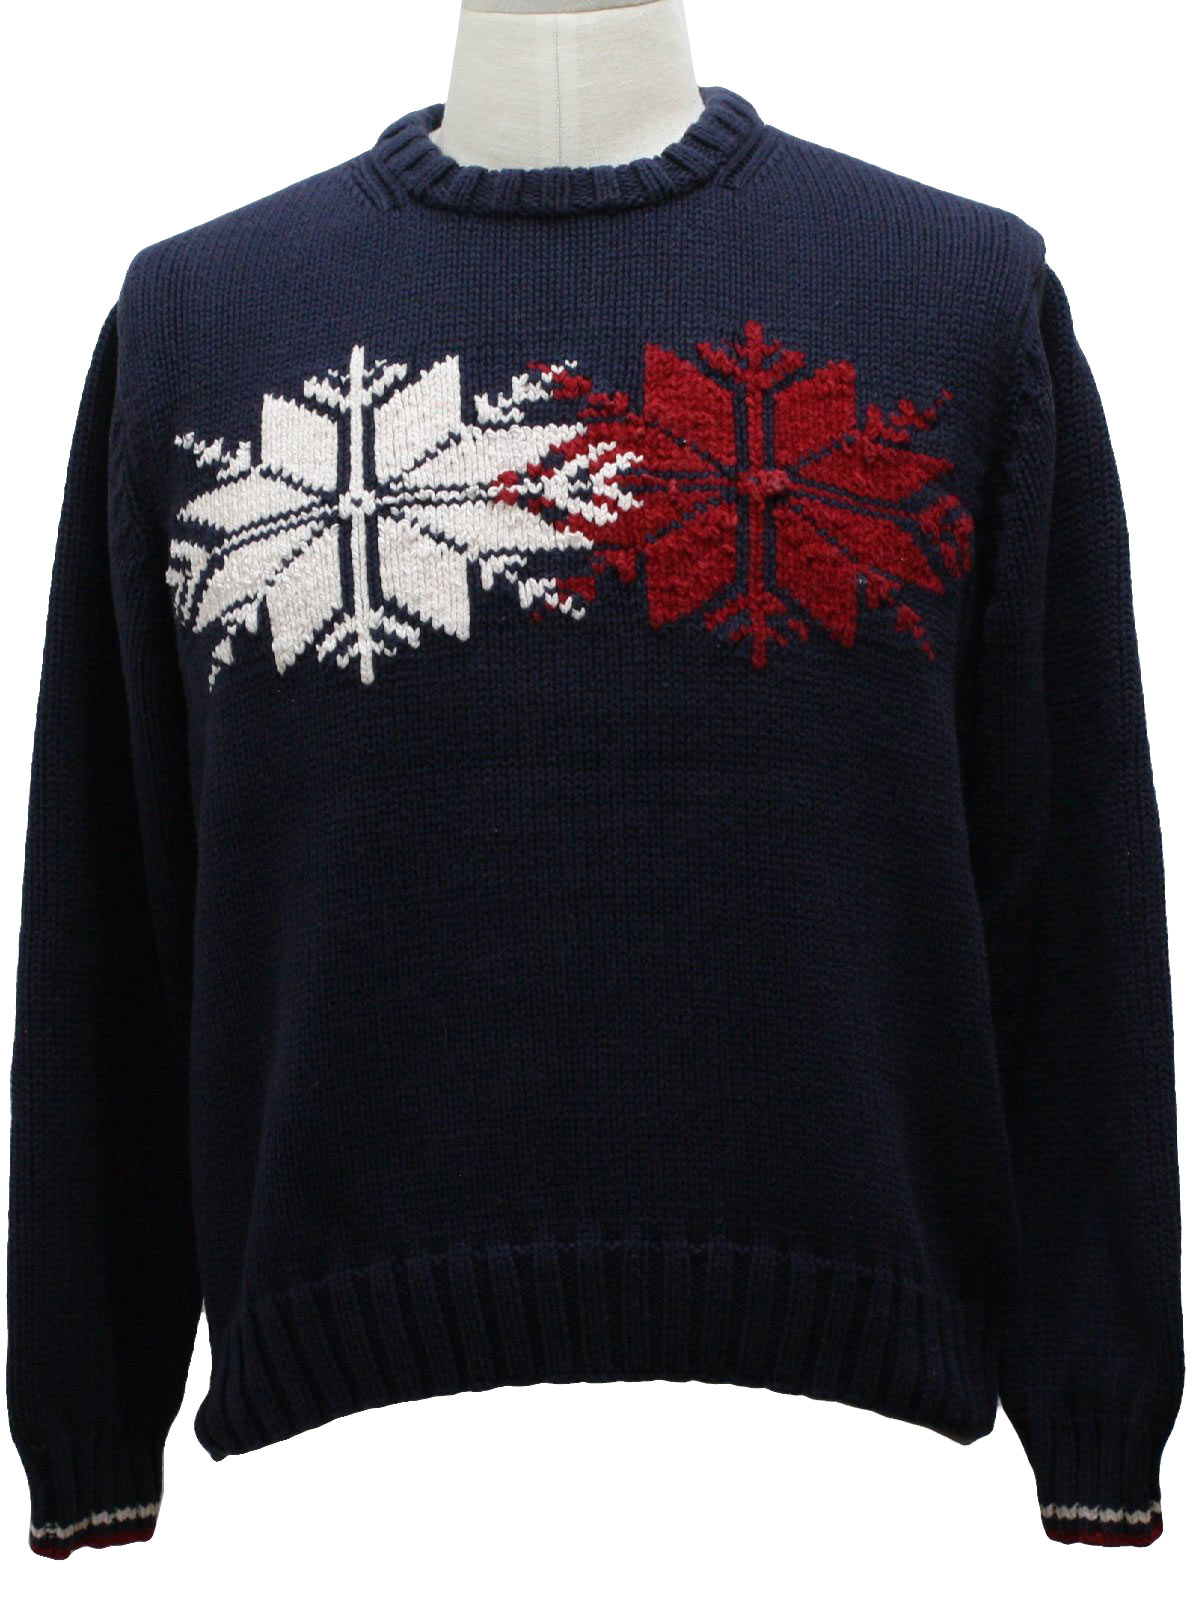 hilfiger christmas sweater